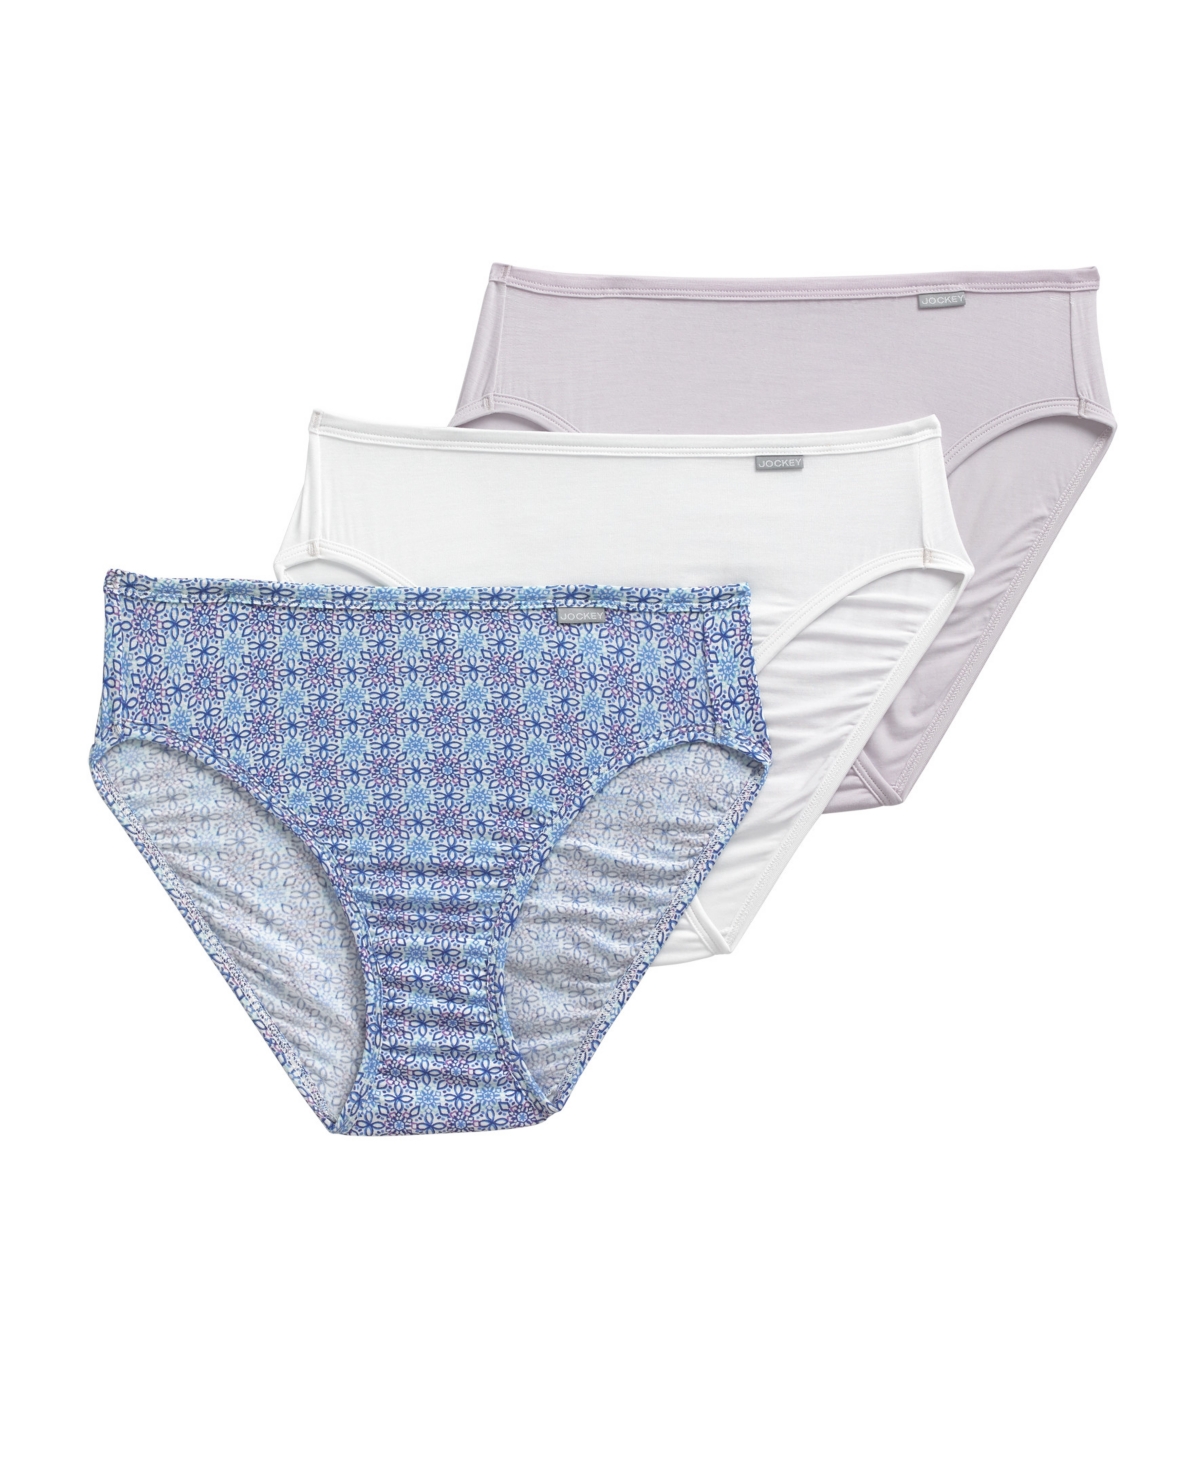 Elance Super Soft French Cut Underwear 3 Pack 2071 - PRETTY PINWHEEL/EGYPTIAN SCROLL/FROSTY P